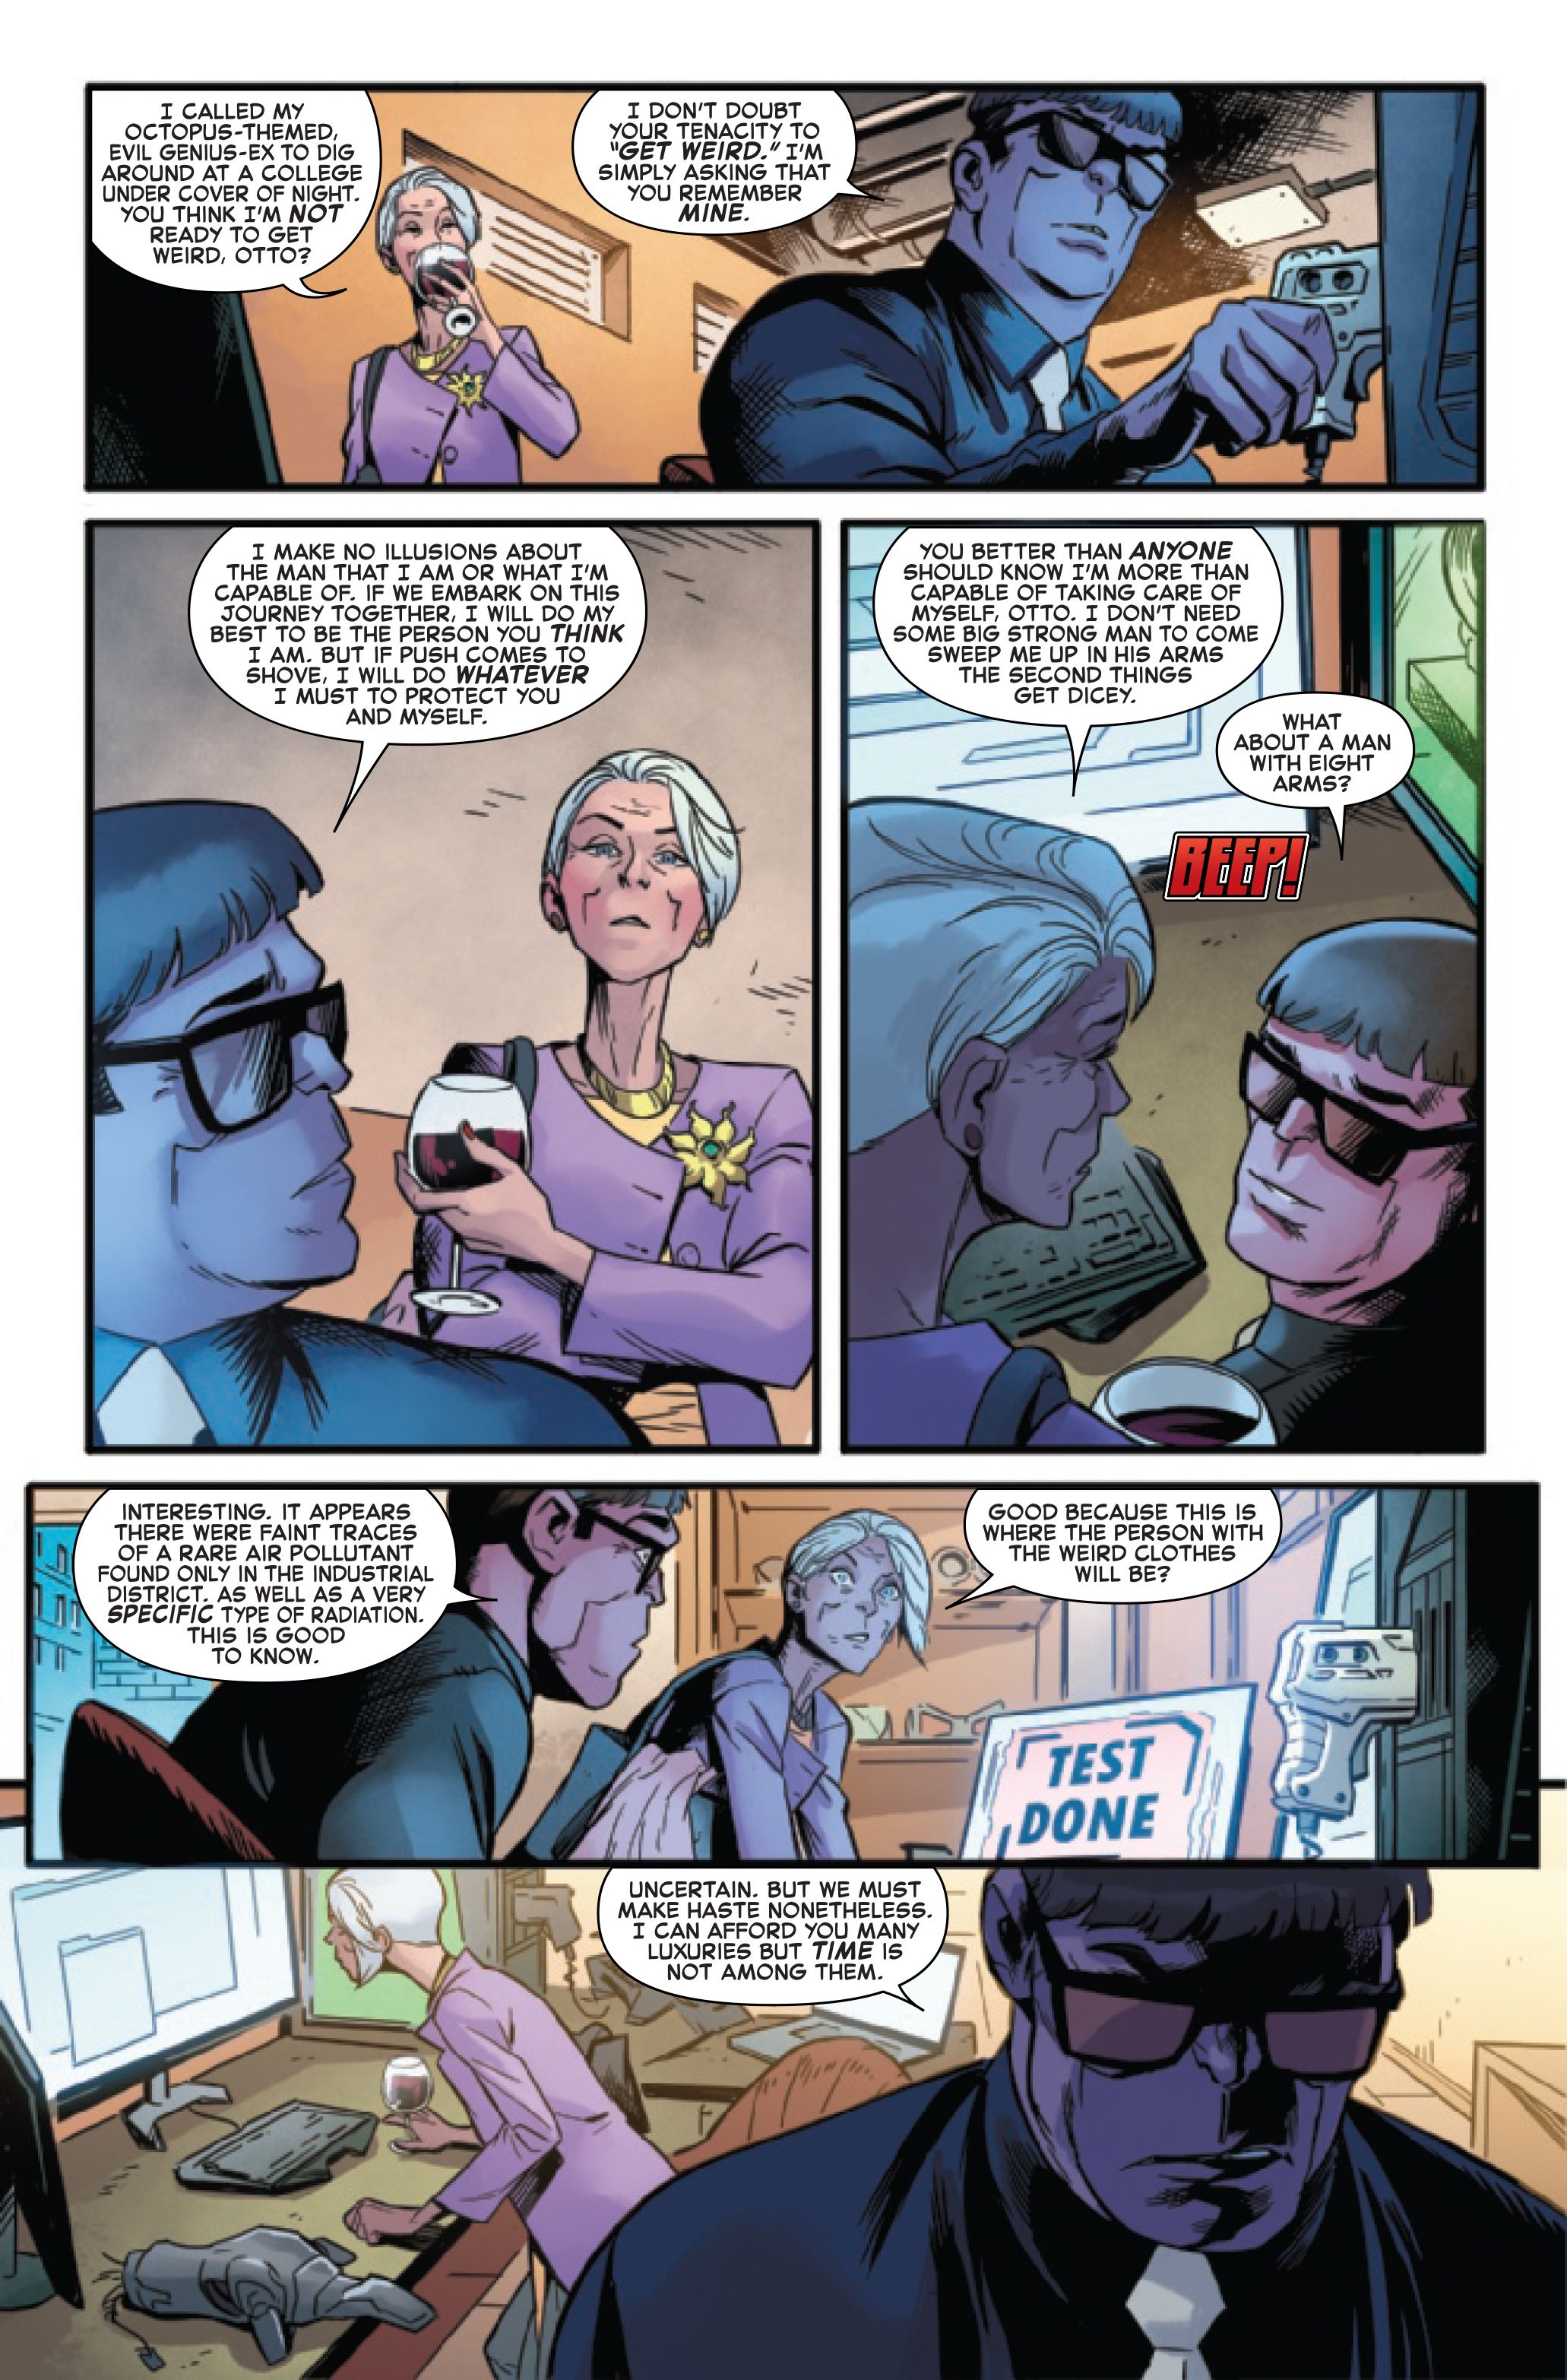 Page 6 of Amazing Spider-Man #80.BEY, by Cody Ziglar, Ivan Fiorelli, Carlos Gomez and Paco Medina.